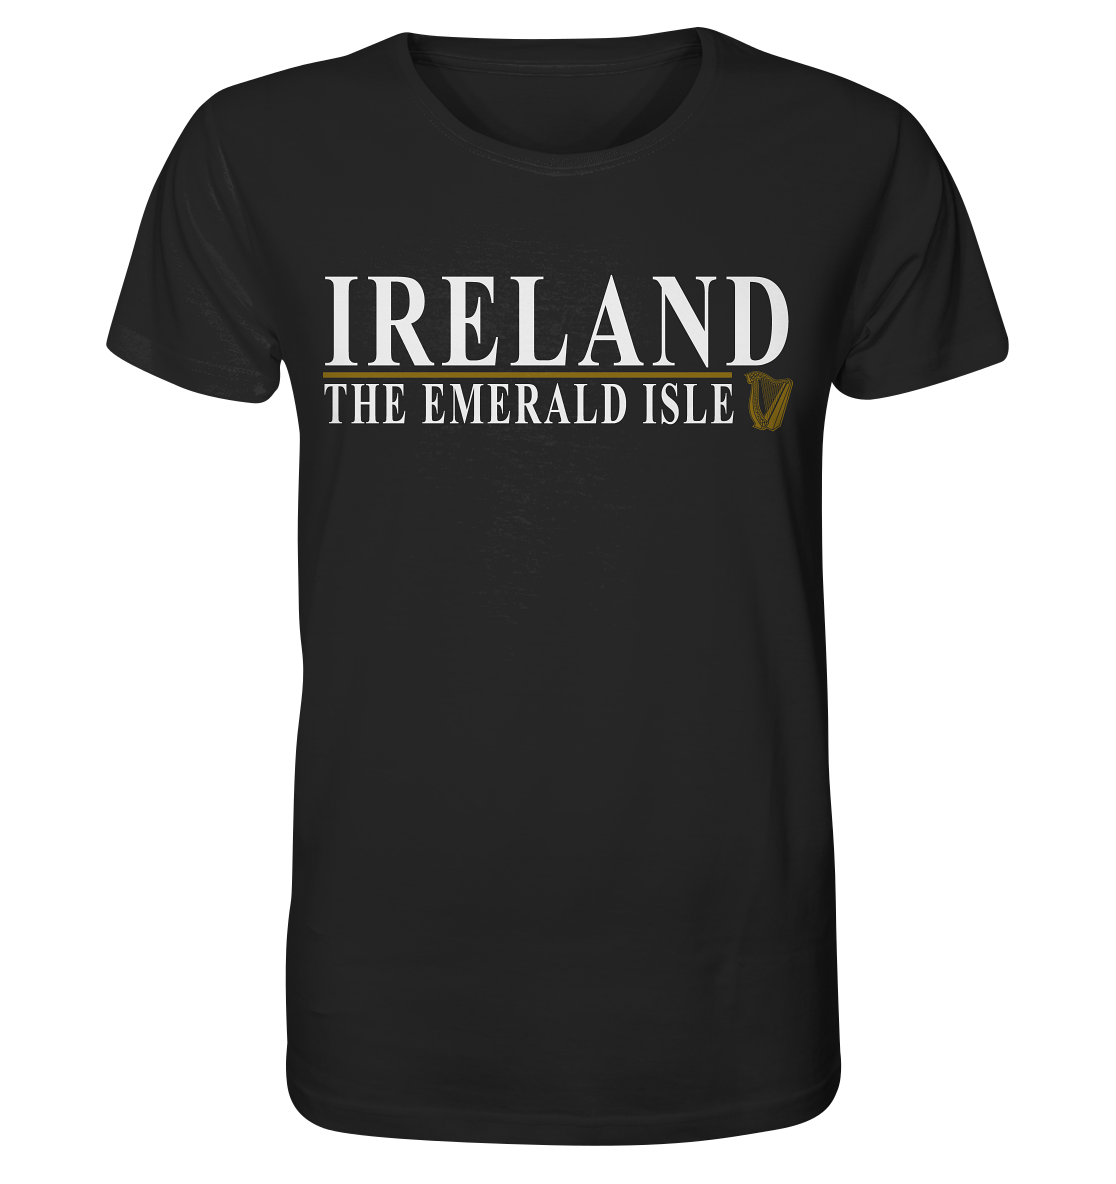 Ireland "The Emerald Isle" - Organic Shirt